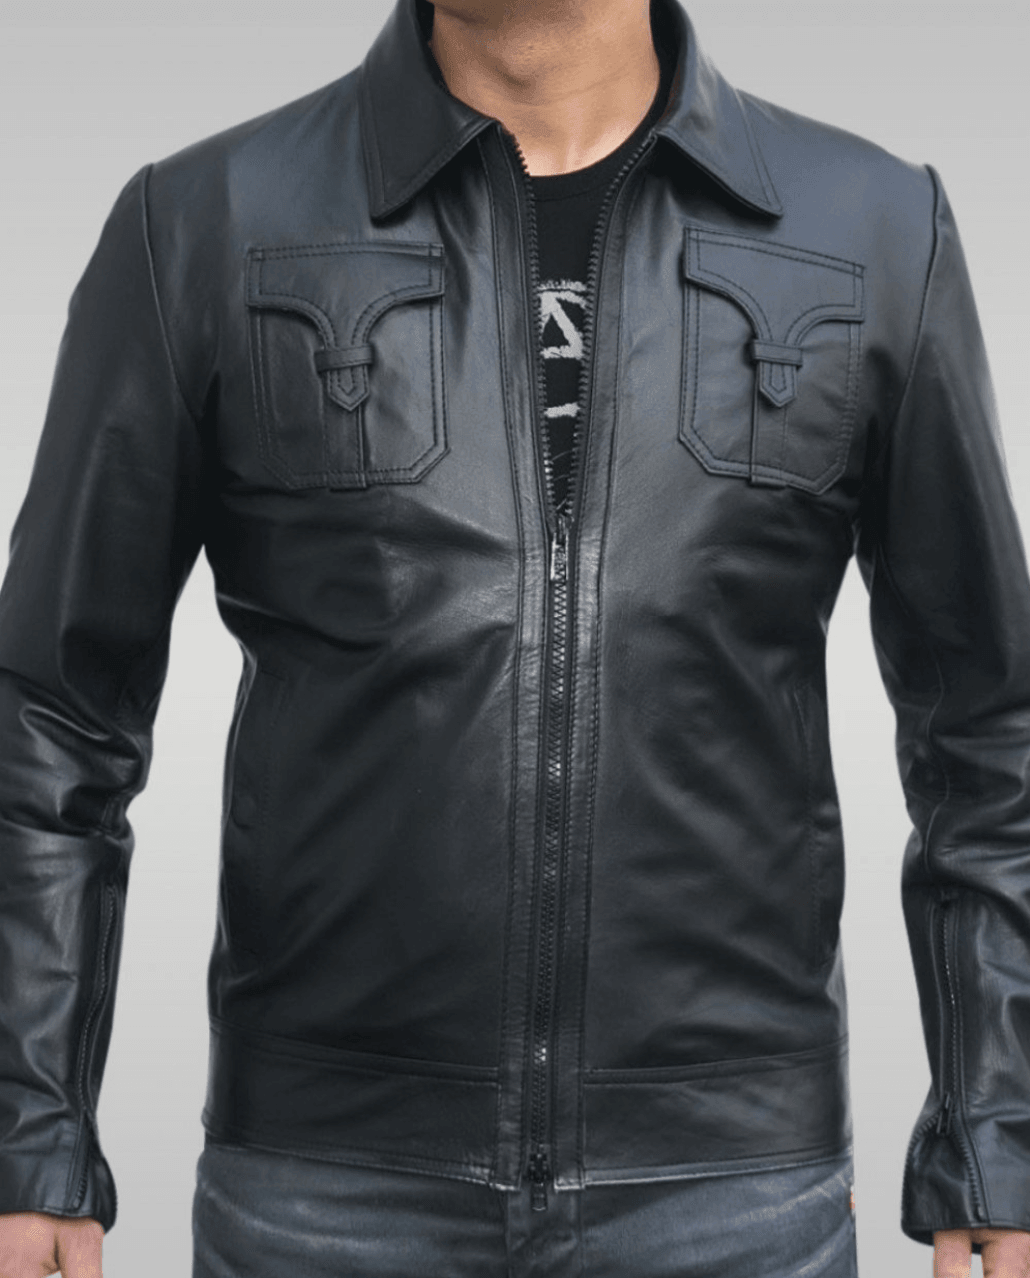 Mens Classic Style Black Leather Shirt Jacket